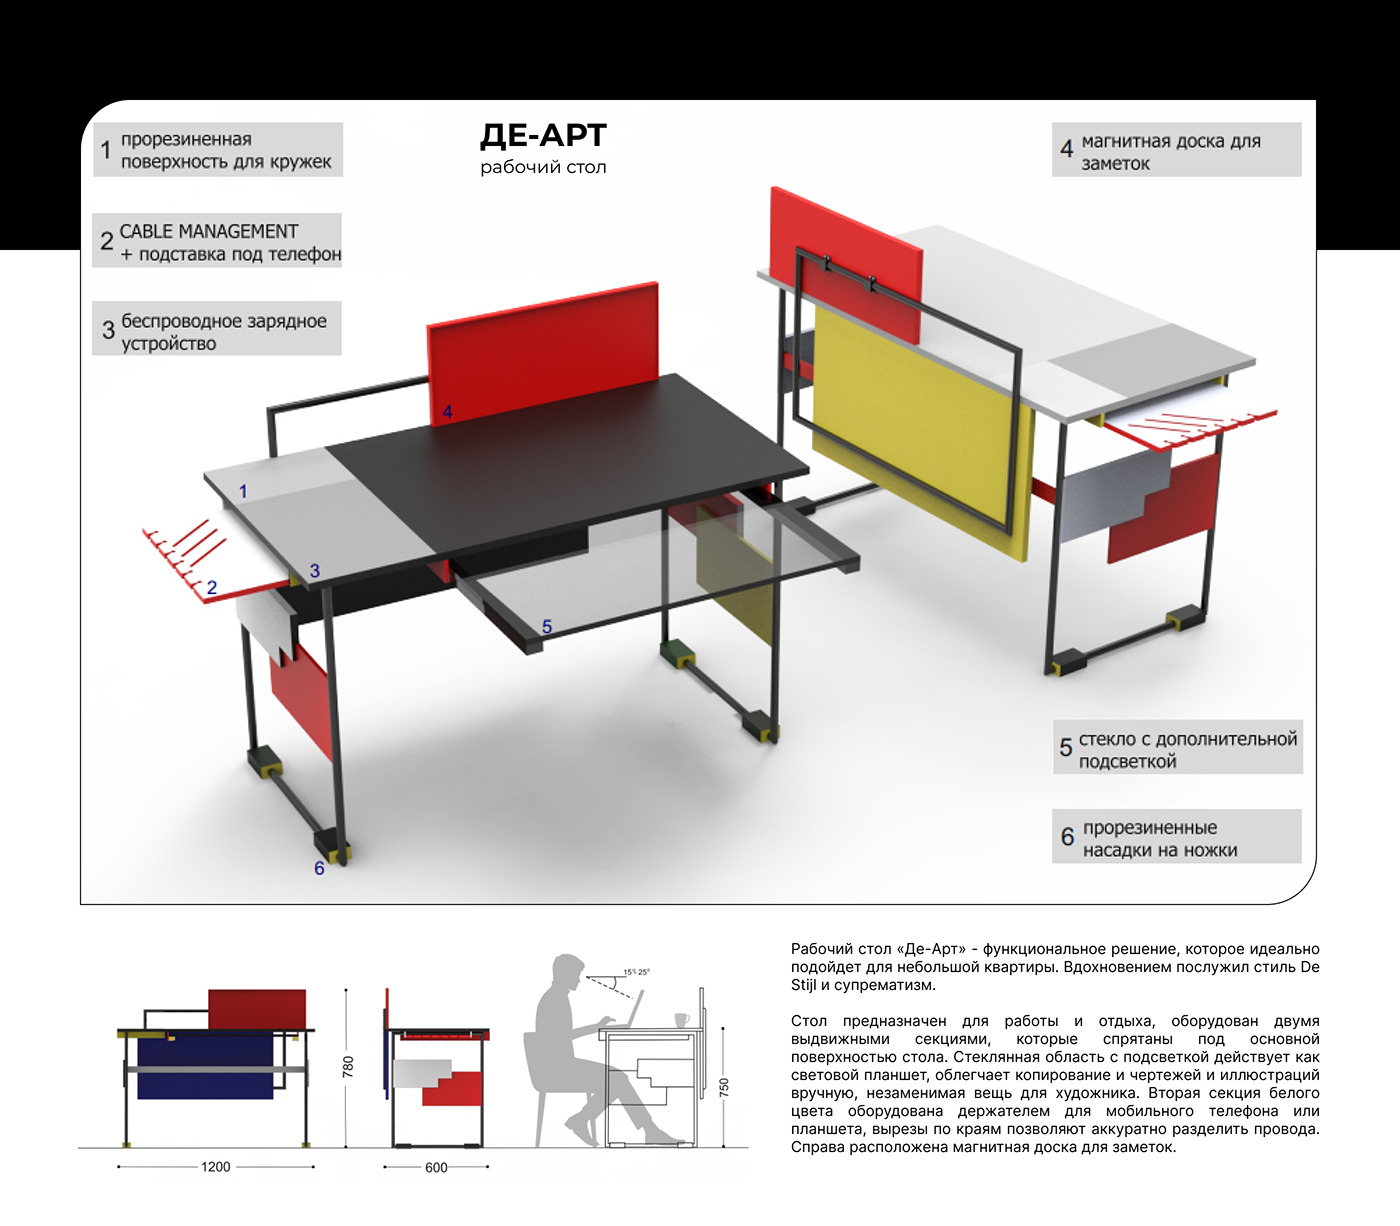 design 3D visualization Render Solidworks keyshot industrial design  portfolio портфолио промышленный дизайн